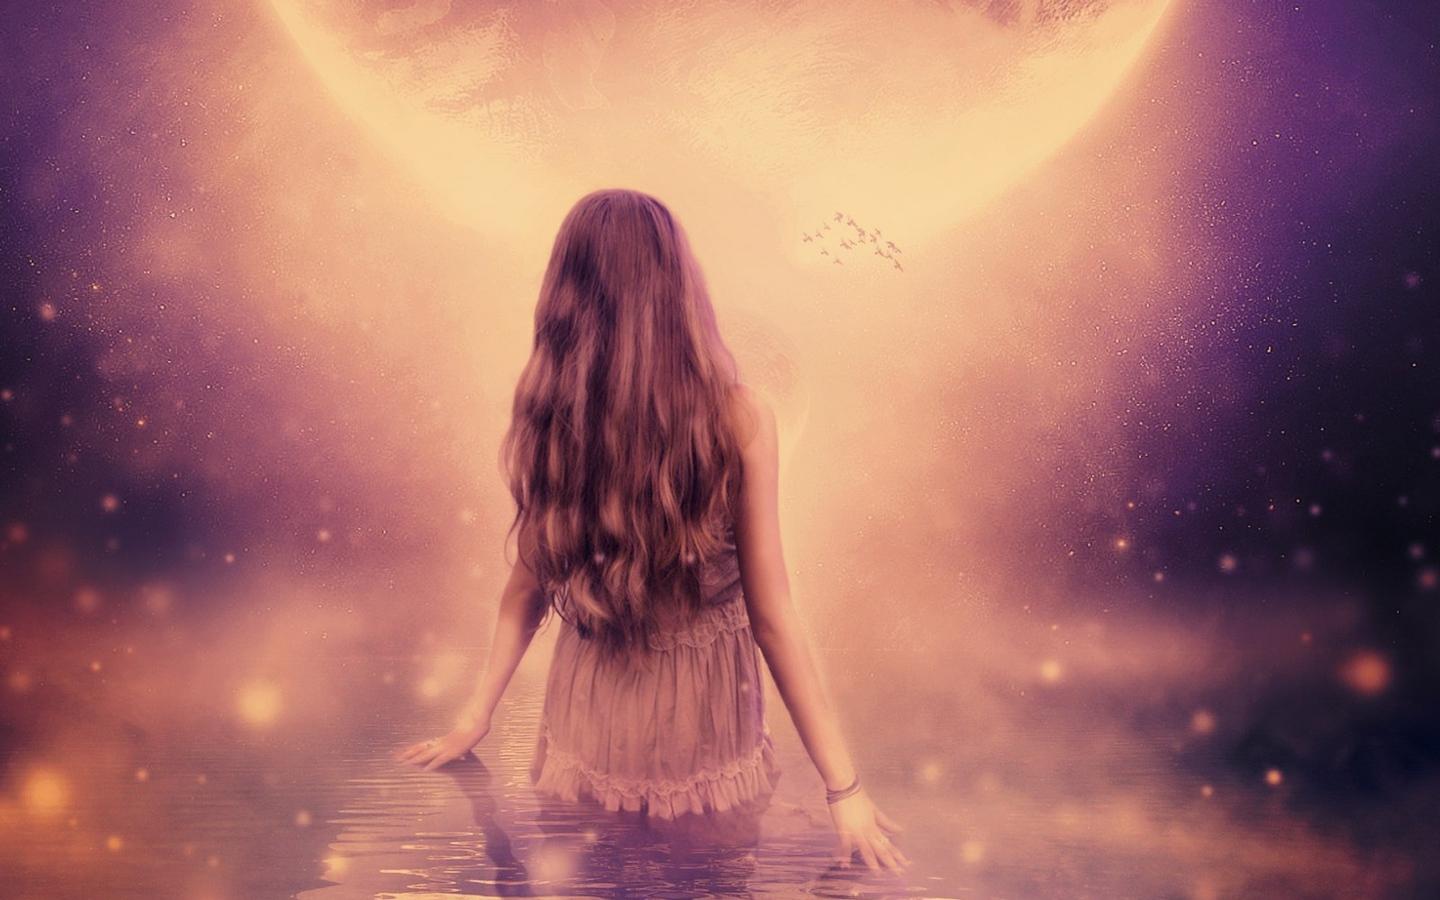 Fantasy Girl in Space River Moon Night Sky wallpaper. Best HD